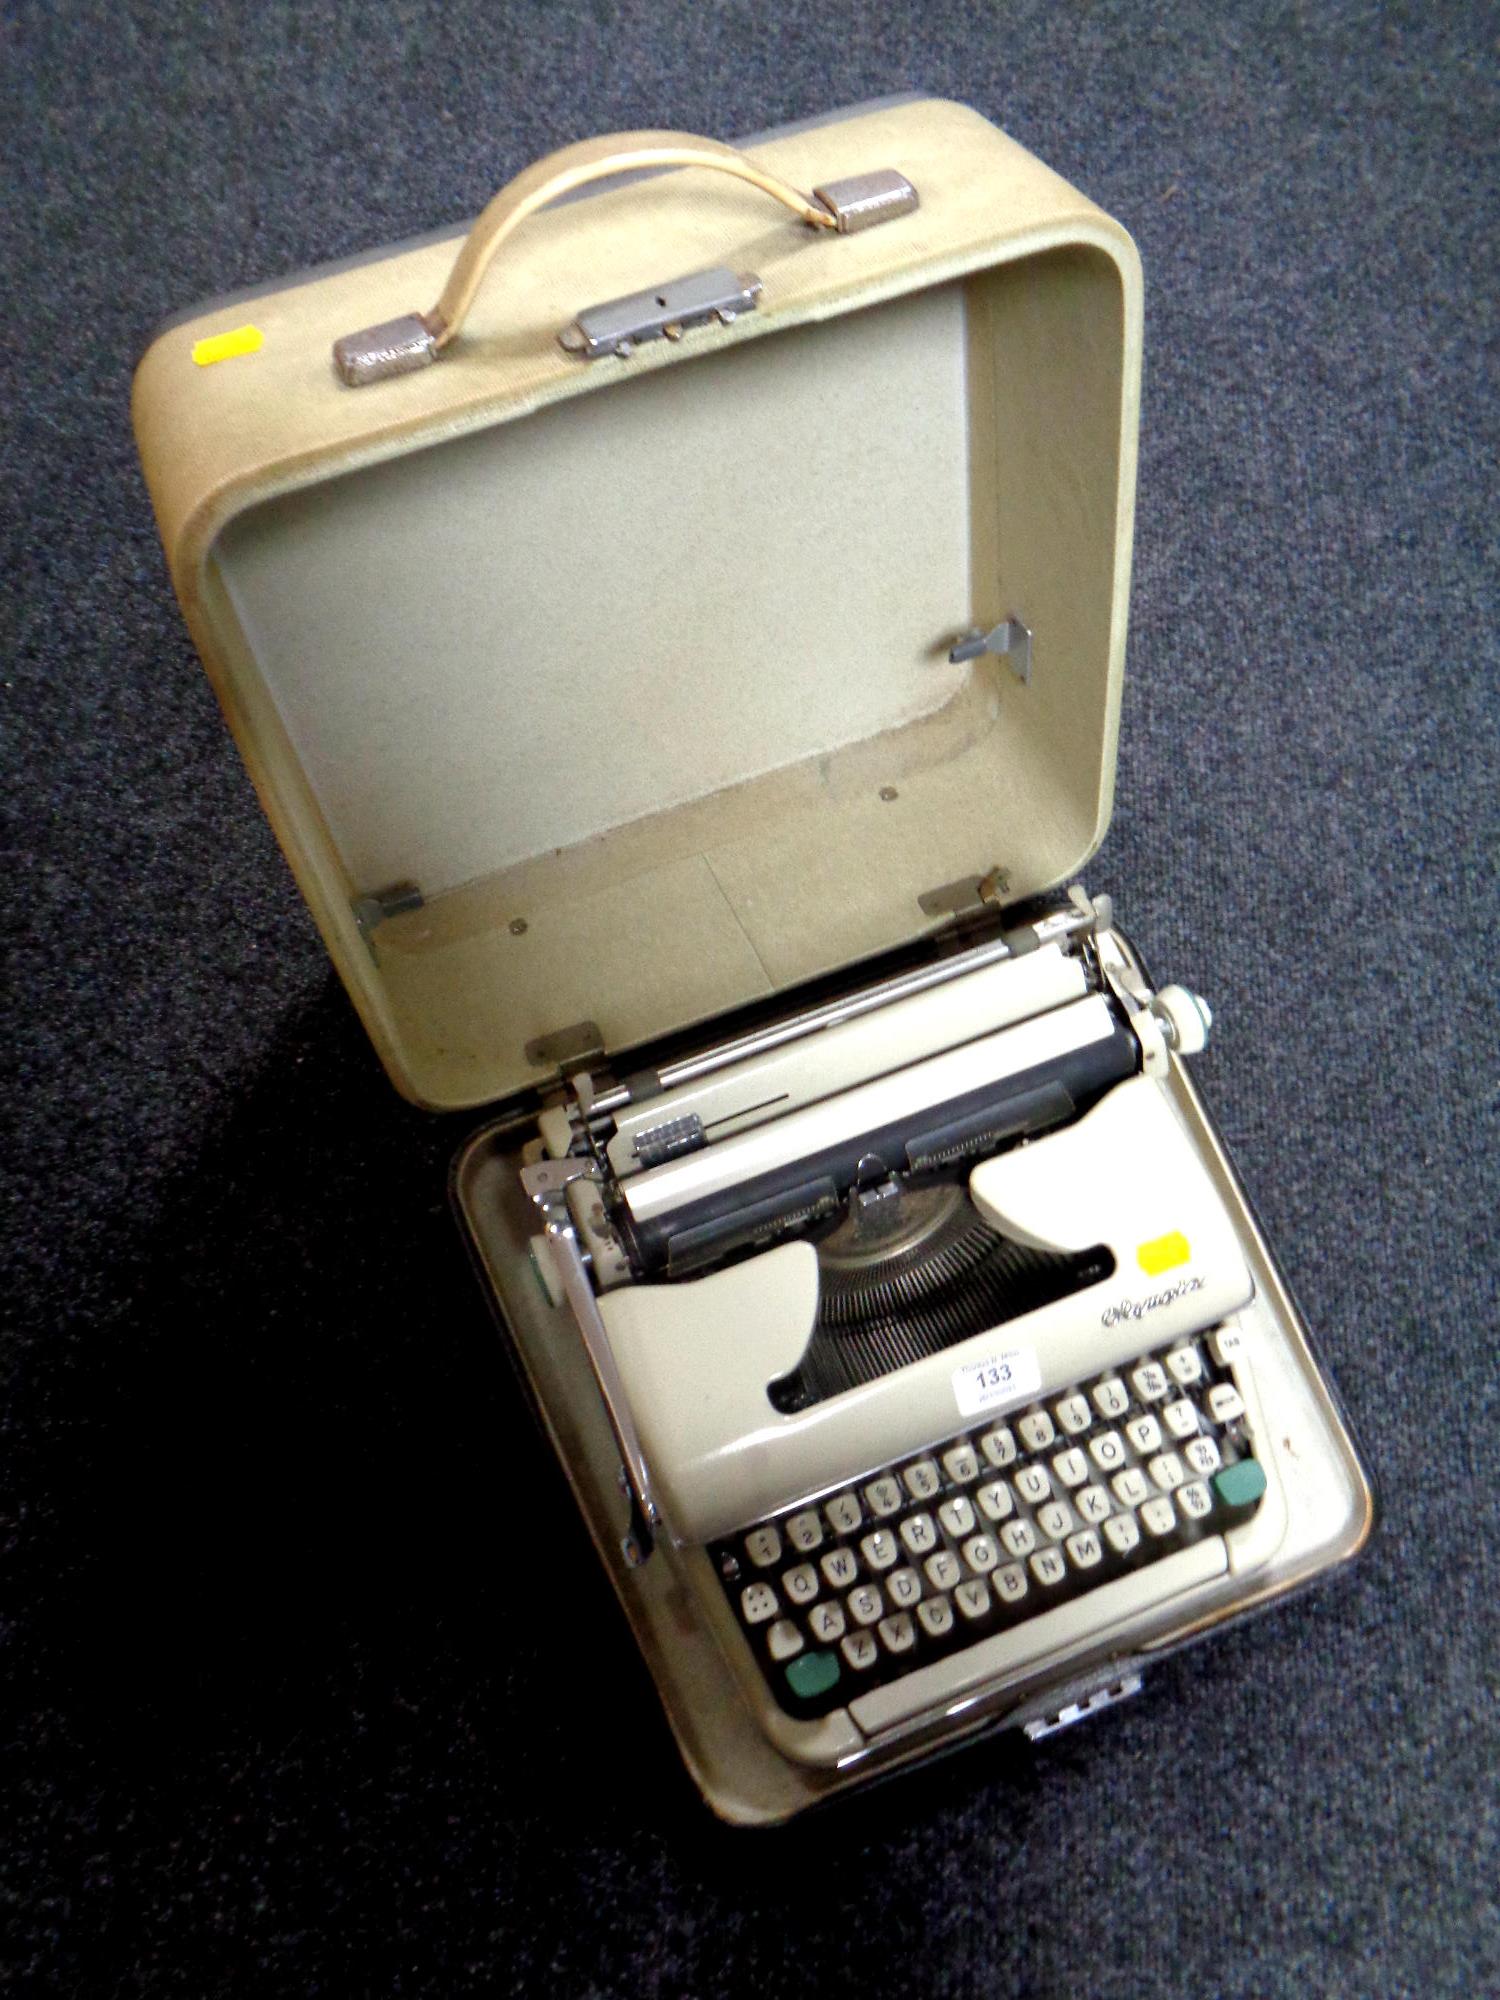 A cased vintage Olympia typewriter.